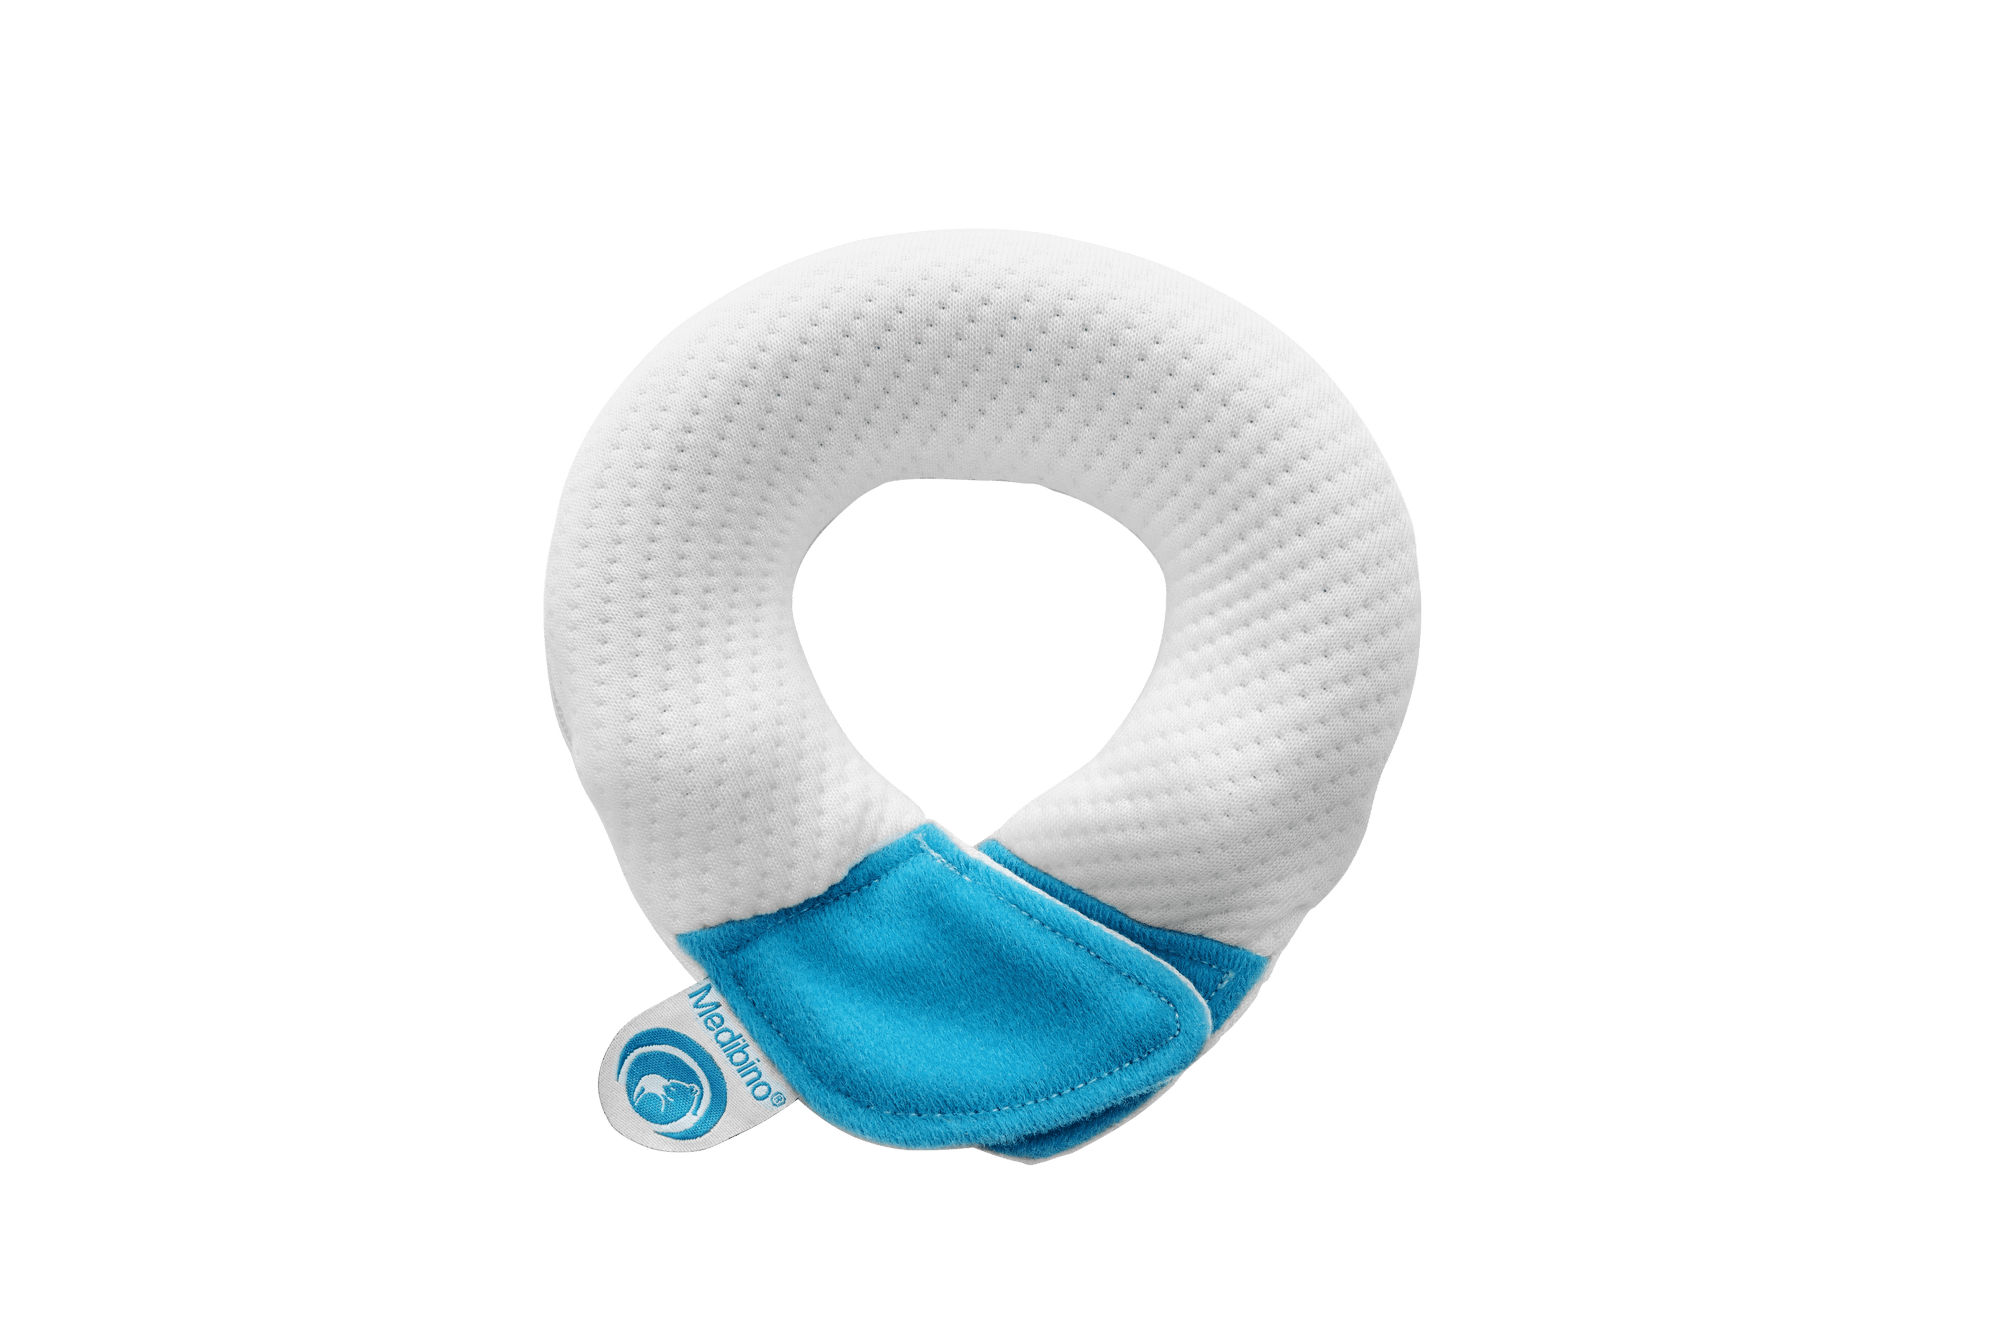 Medibino cushion in blue for baby flat head